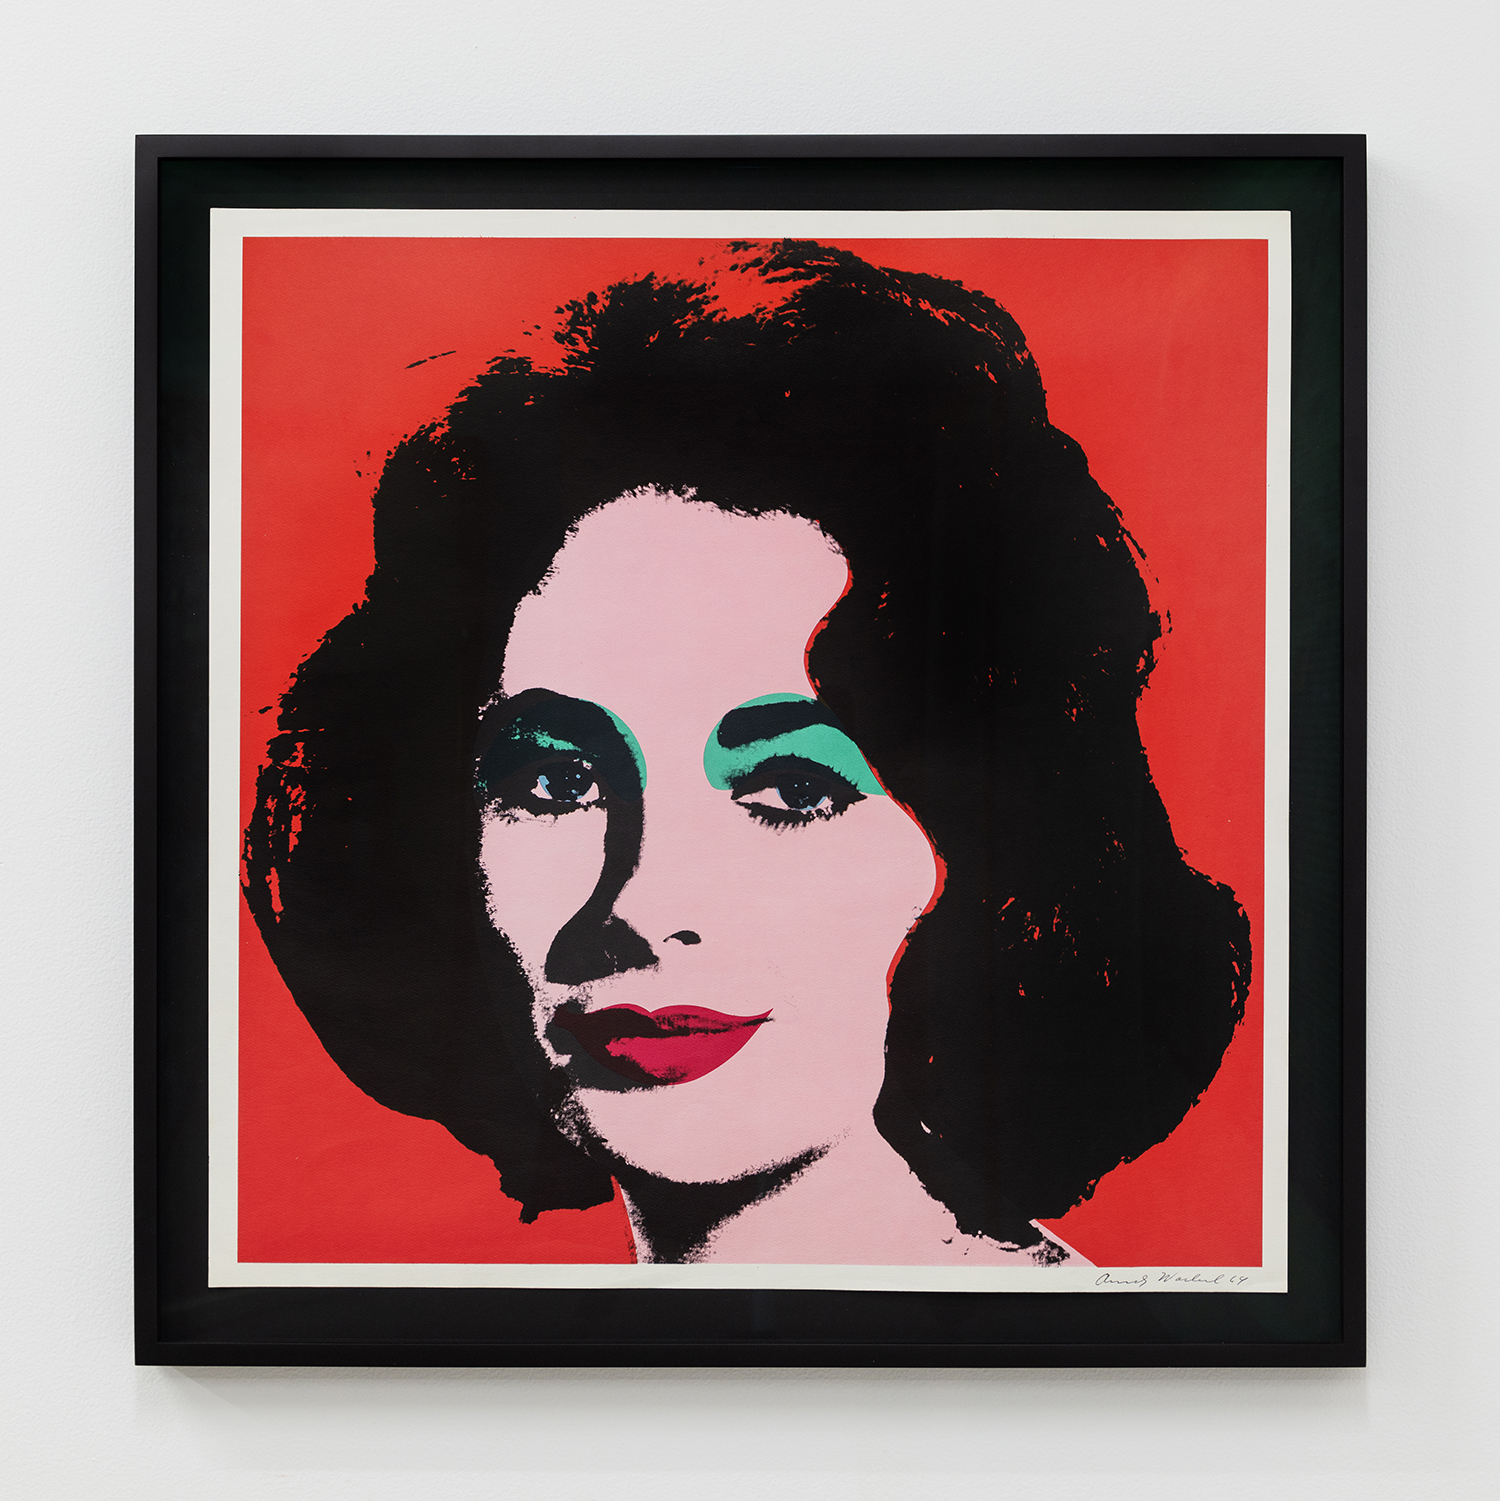 Andy Warhol Liz, 1964 Offset lithograph Image Dimensions: 21 7/8 x 21 7/8 inches (55.6 x 55.6 cm) Paper Dimensions: 23 1/8 x 23 1/8 inches (58.7 x 58.7 cm) Framed Dimensions: 26 1/8 x 26 1/8 inches (66.4 x 66.4 cm) Edition of 300